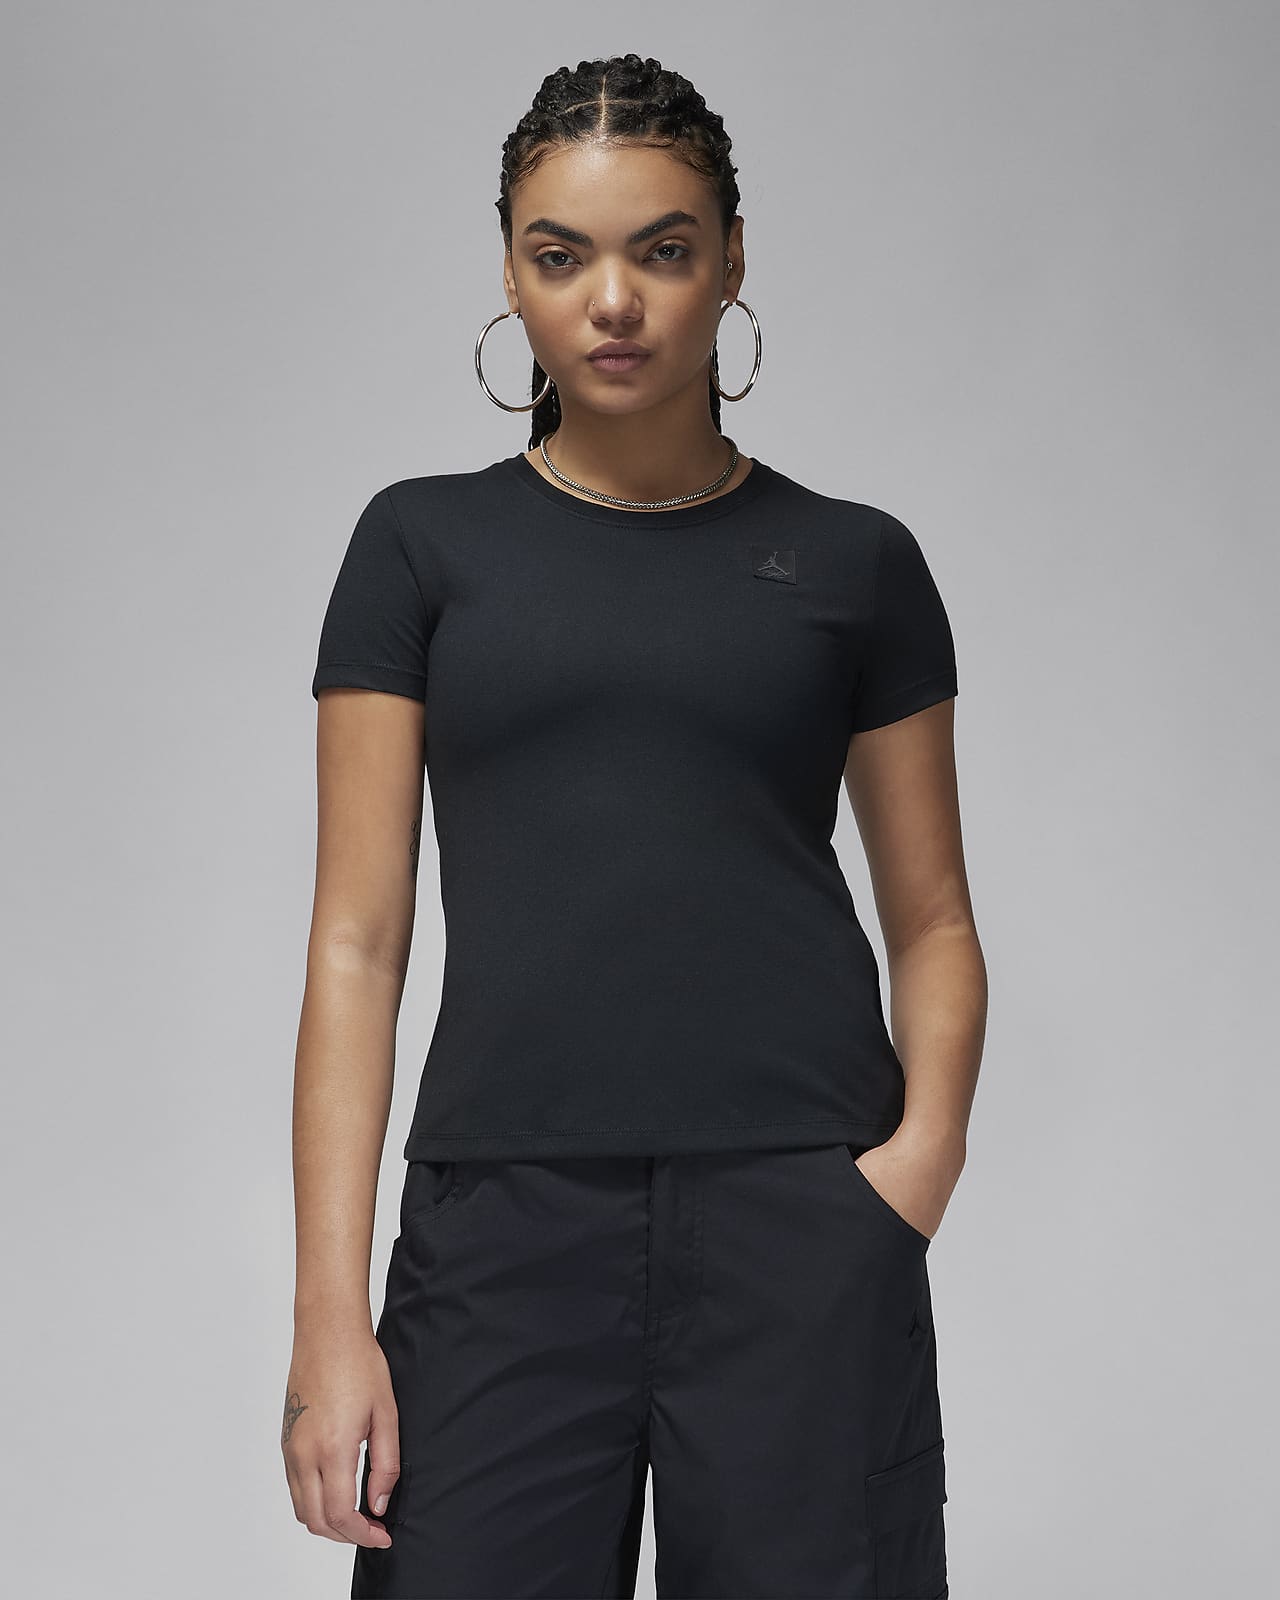 Women's Short Sleeve Shirts. Nike CA